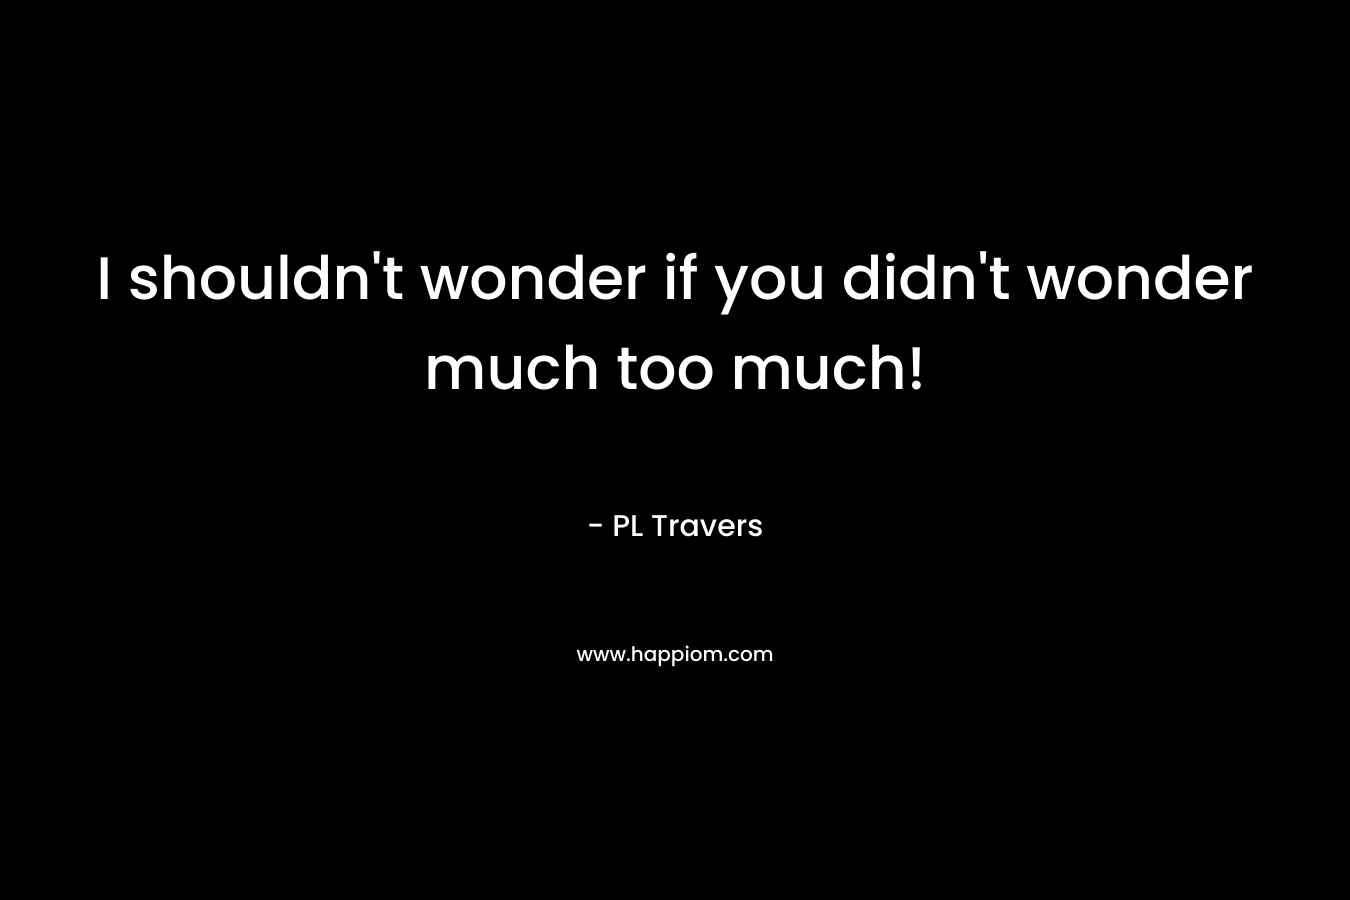 I shouldn't wonder if you didn't wonder much too much!